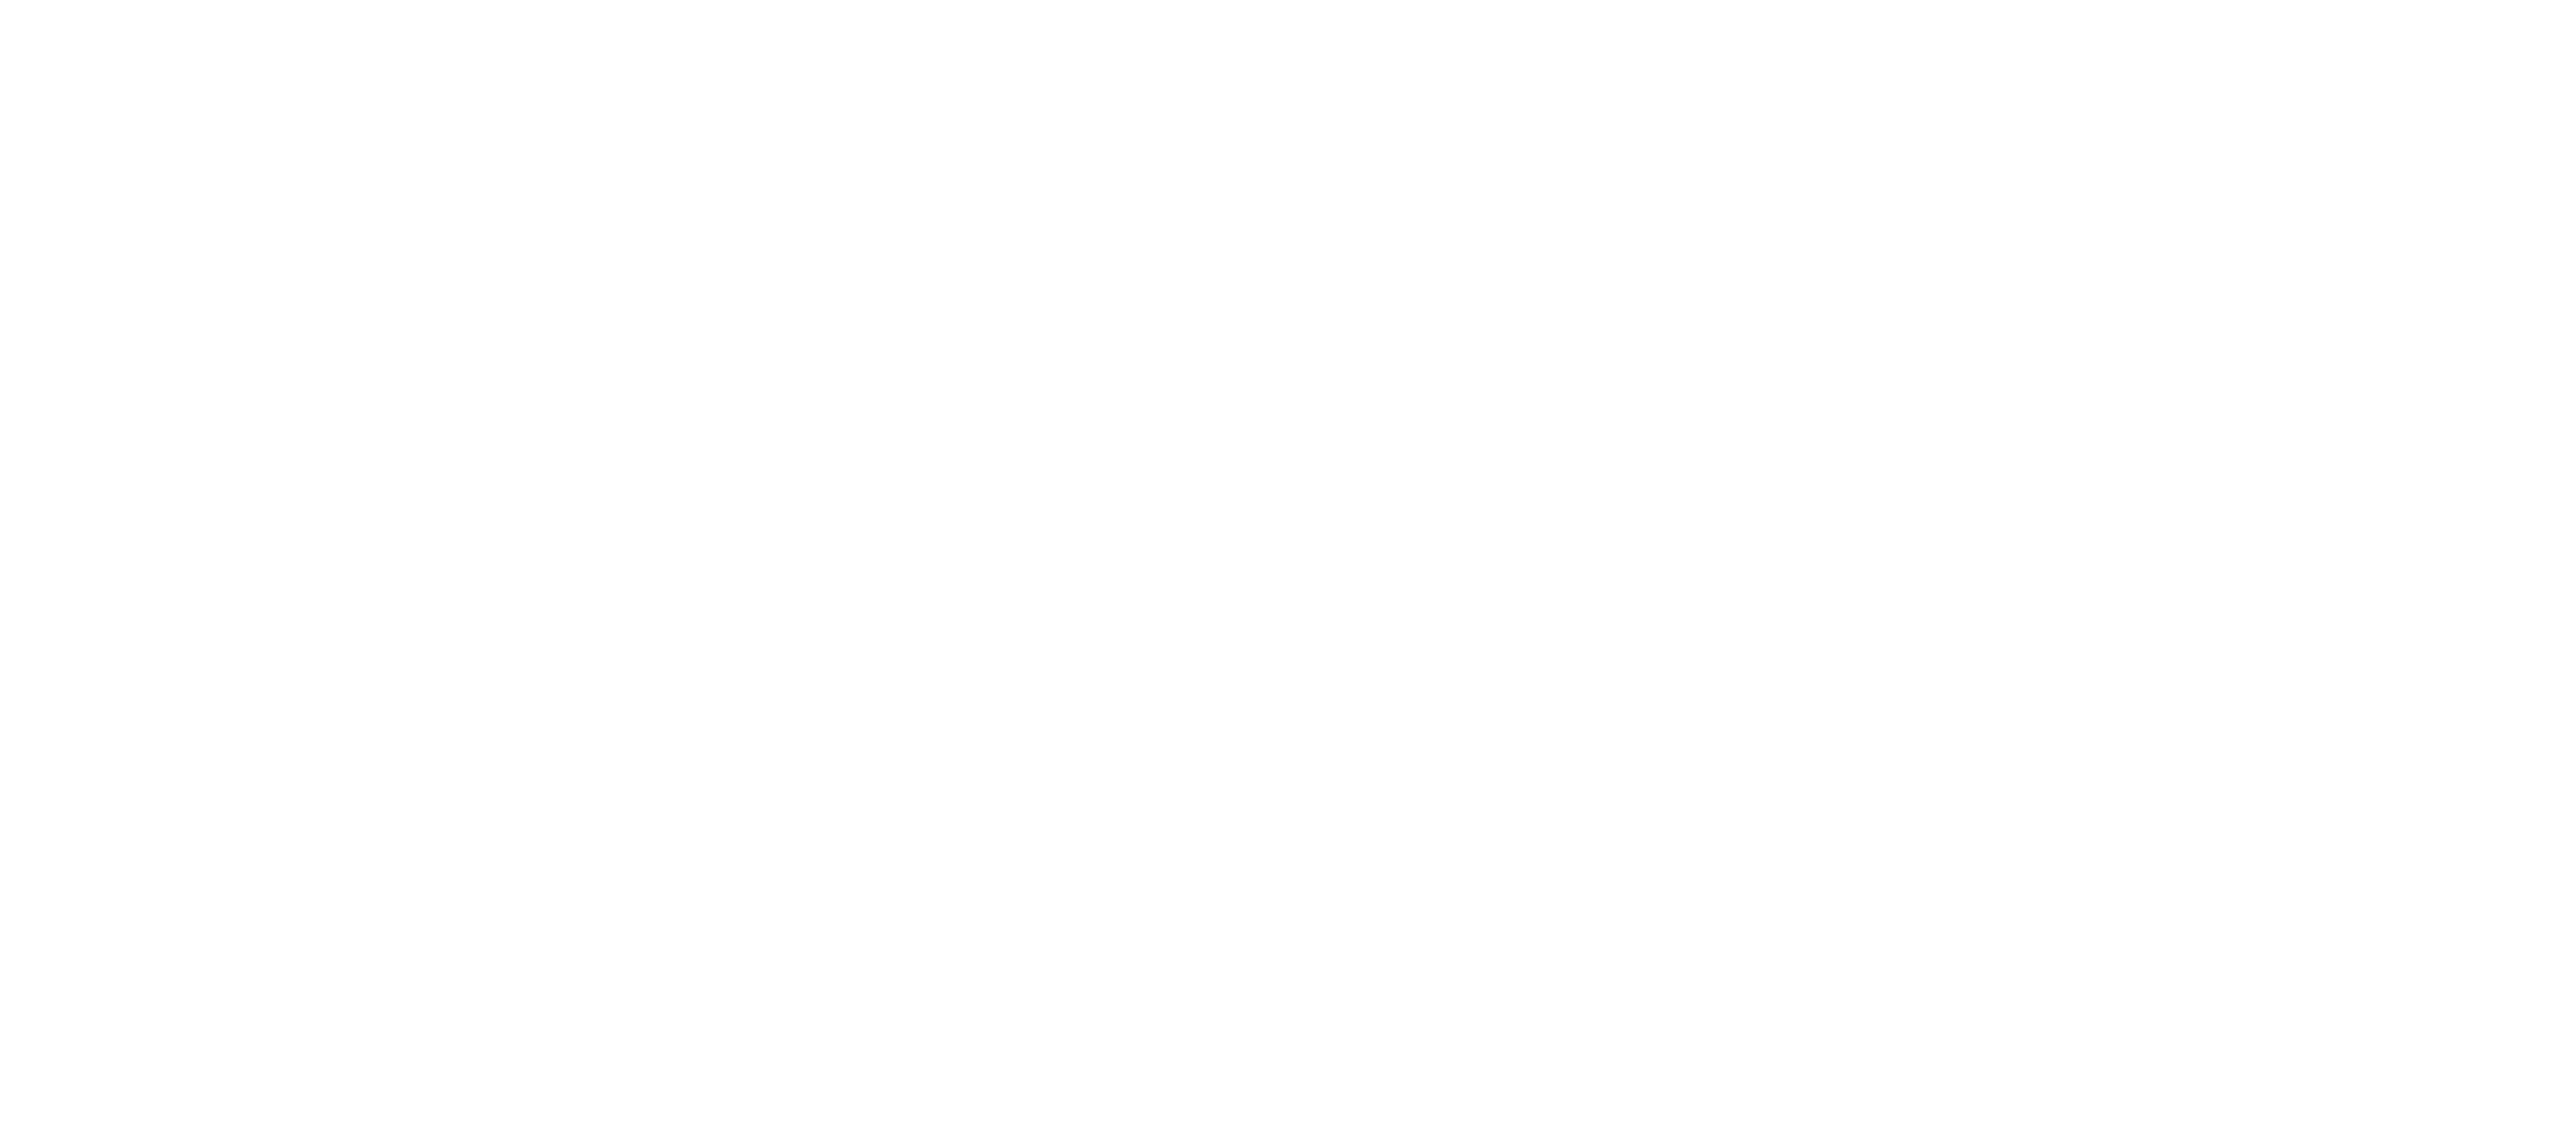 Jan Keller